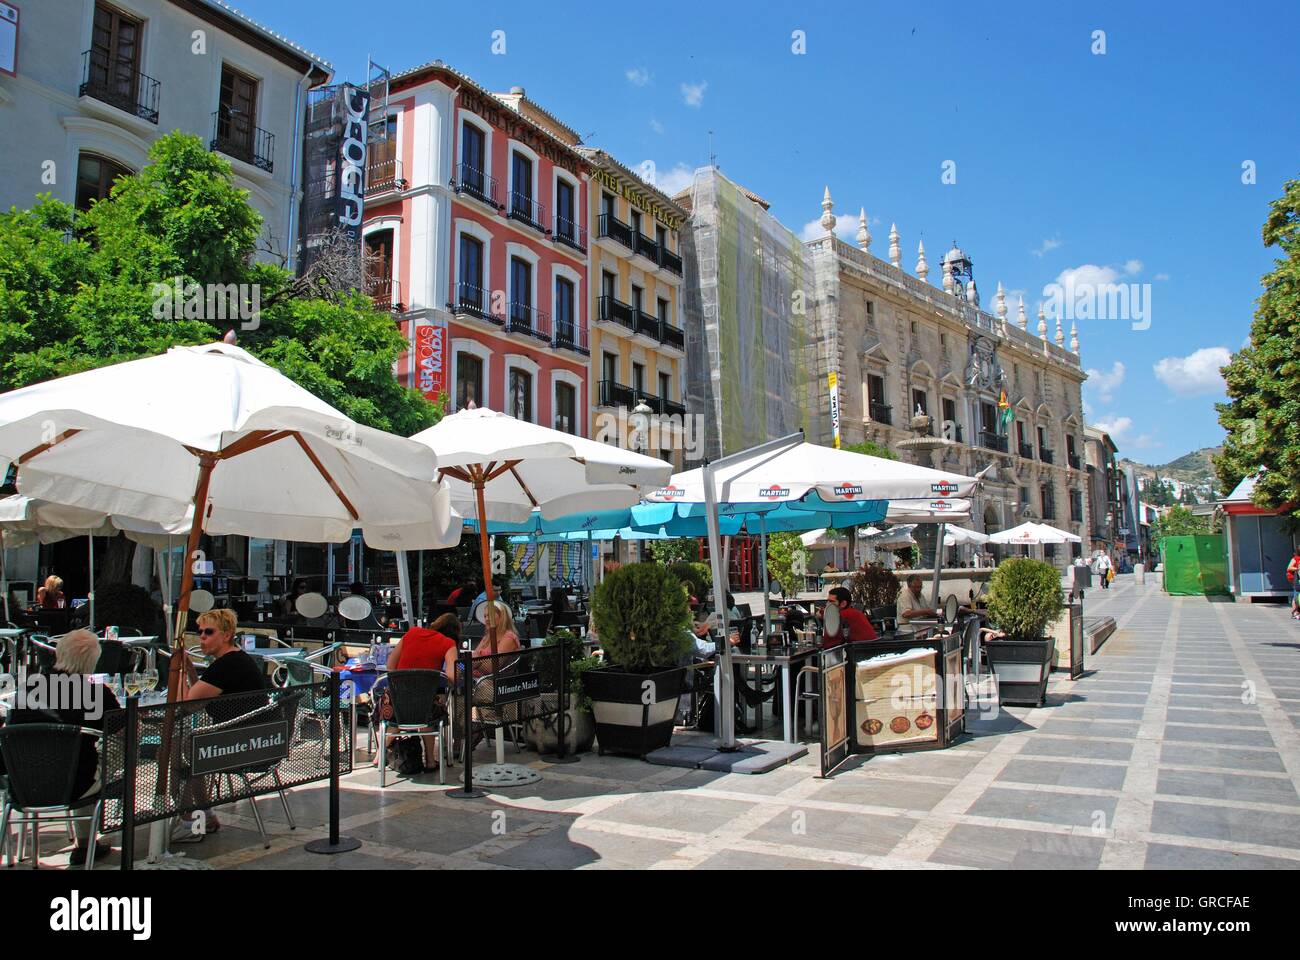 Pavement cafes in the Plaza Nueva, Granada, Granada Province, Andalusia, Spain, Western Europe. Stock Photo